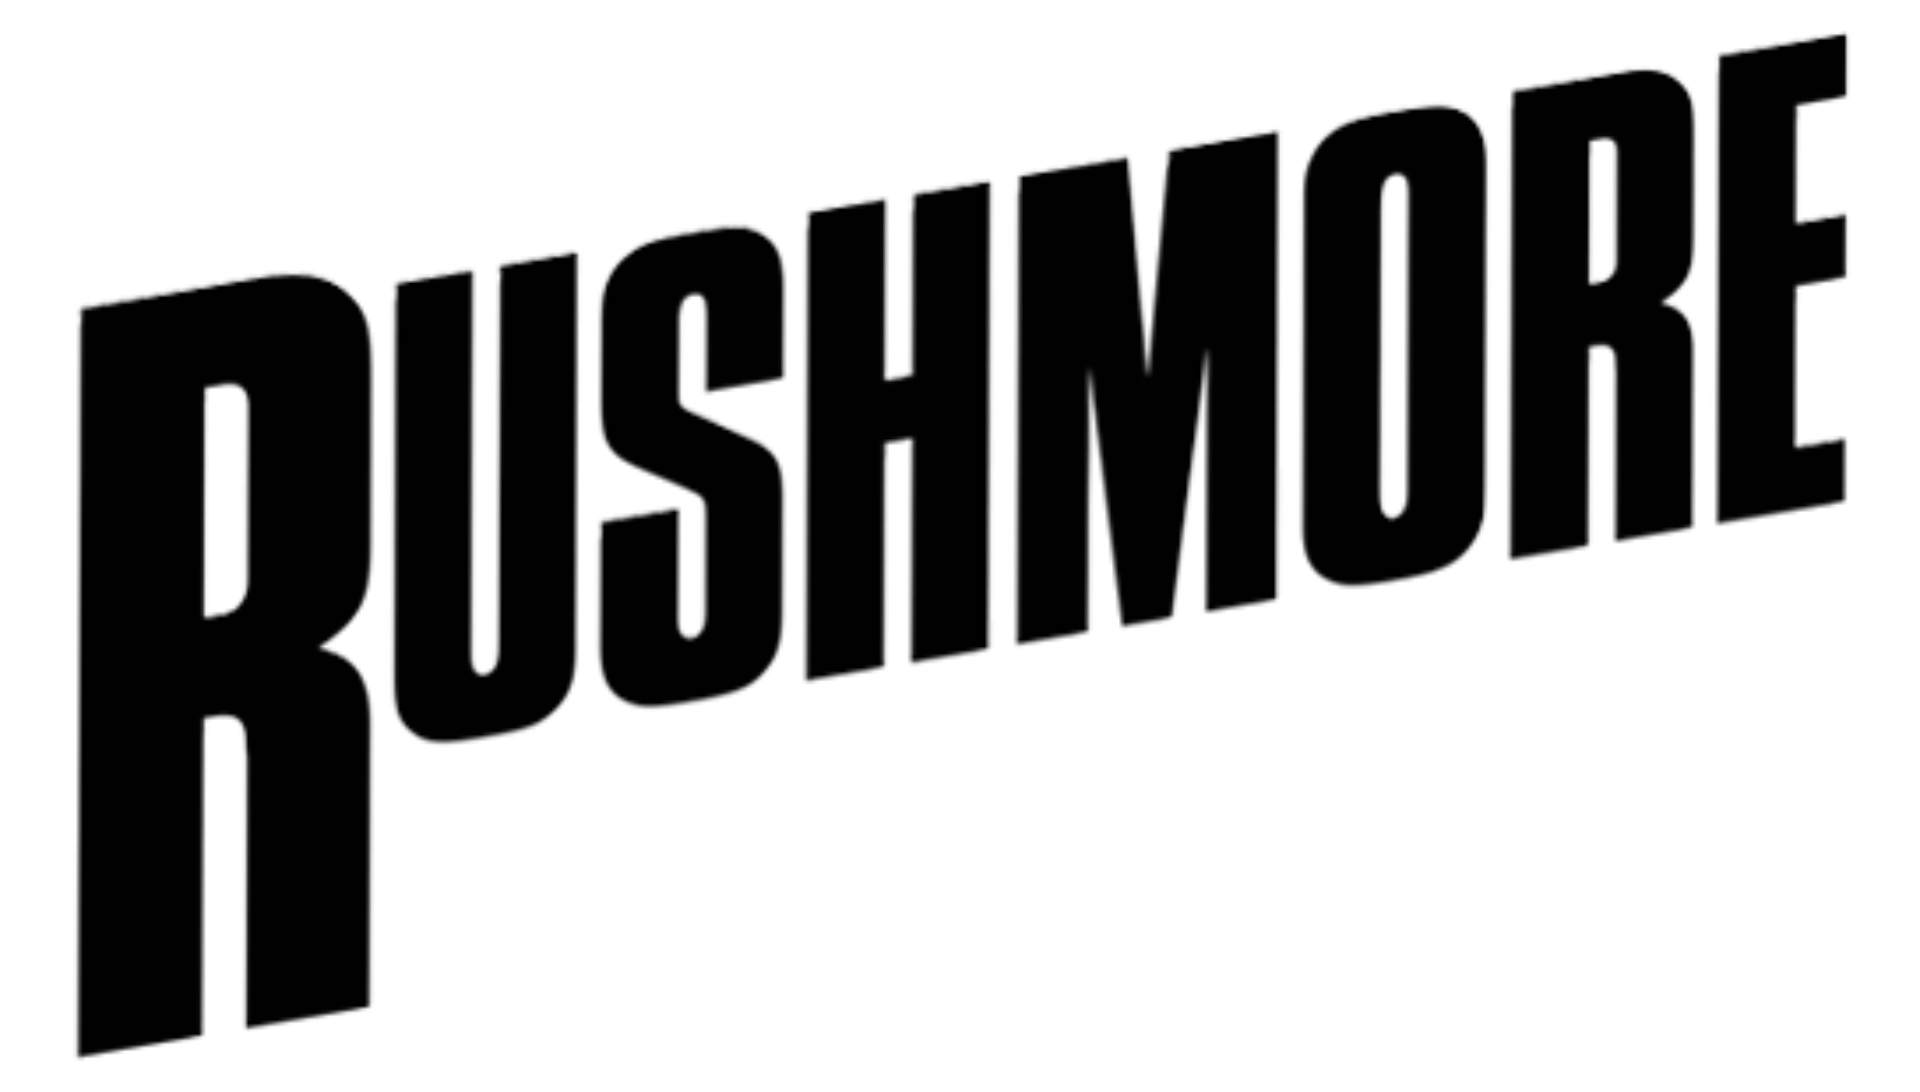 Rushmore Wikipedia